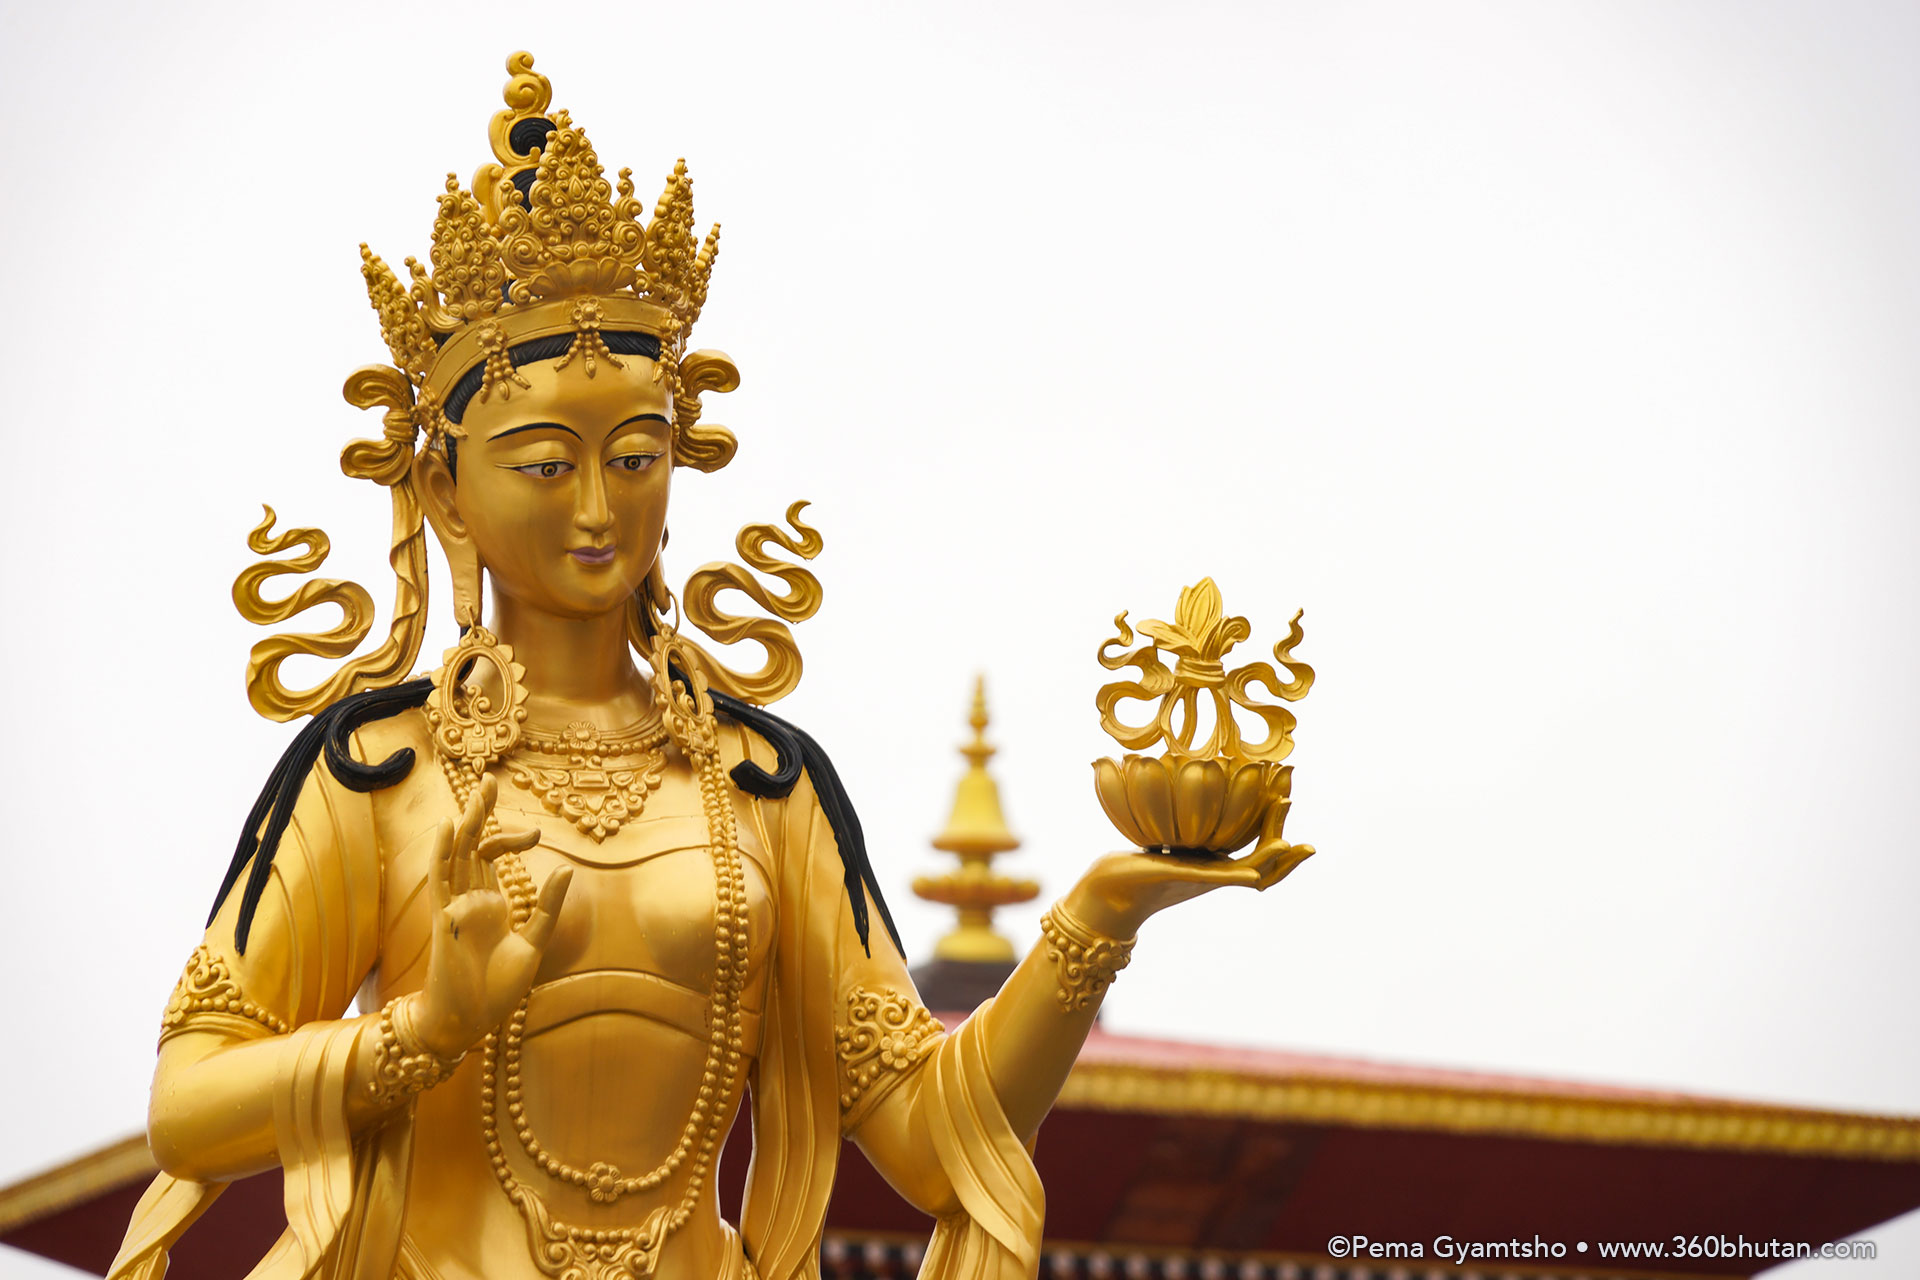 One of the Dakini statues at Kuensel Phodrang